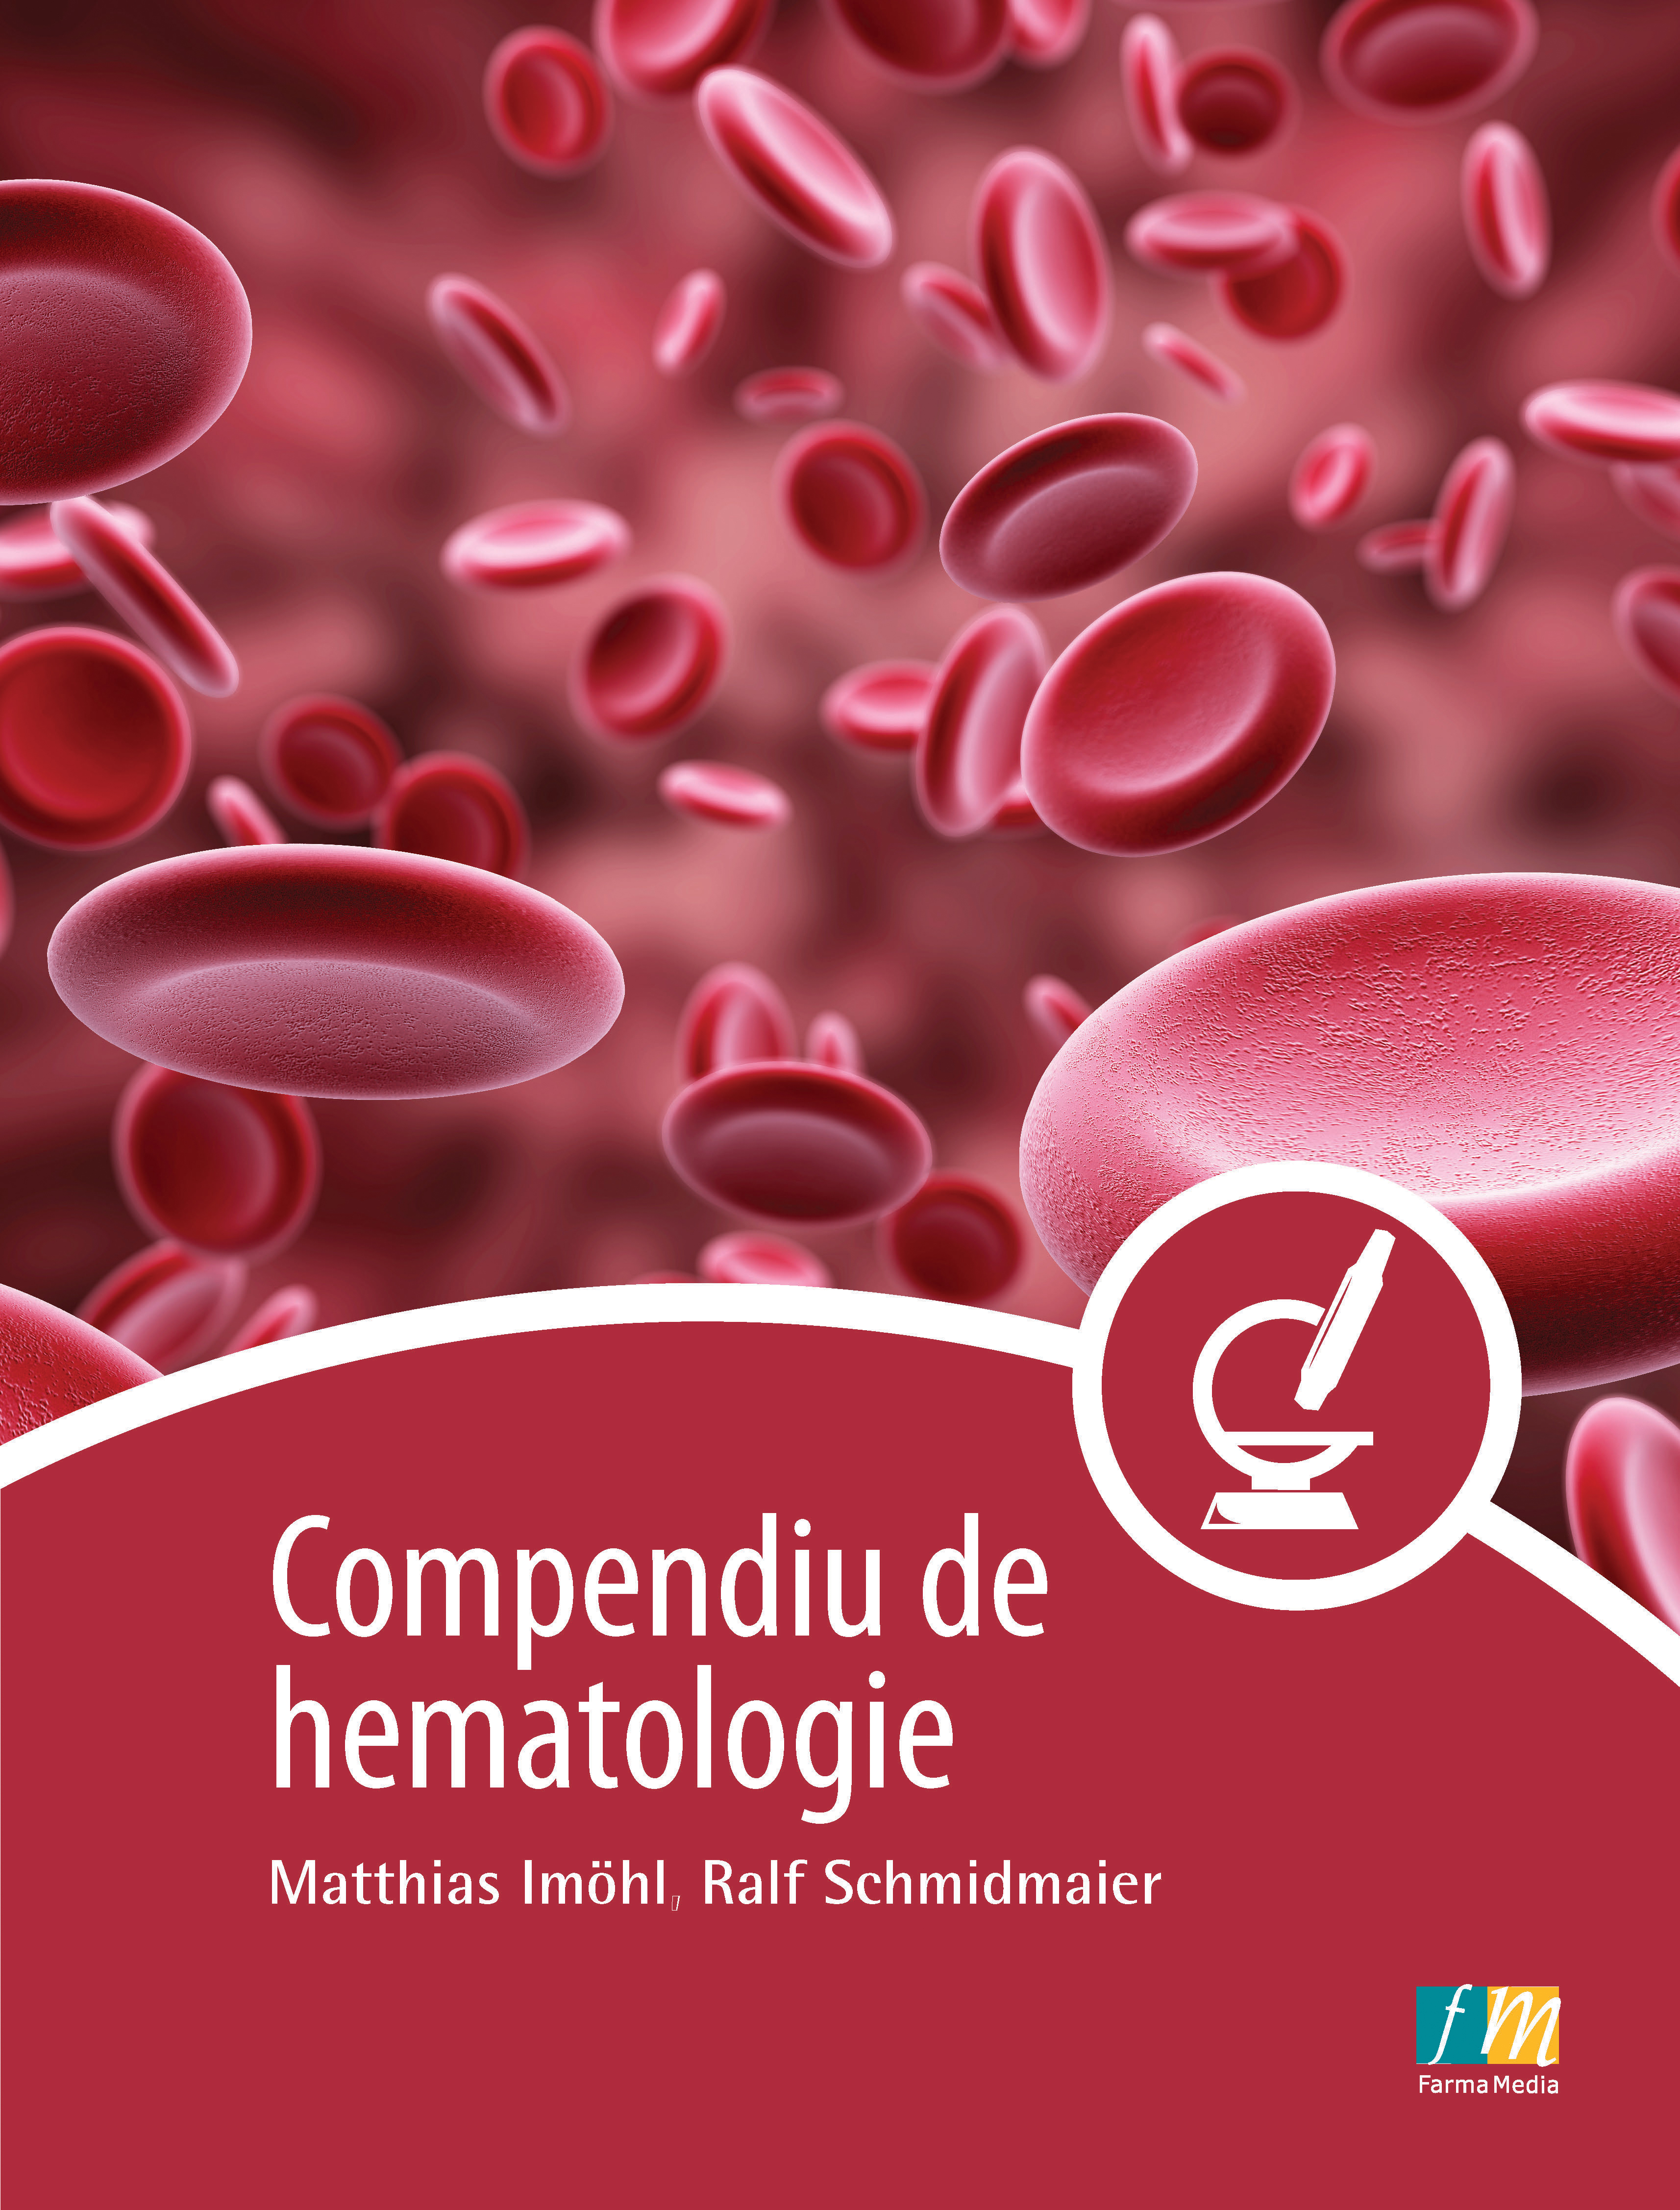 Compendiu De Hematologie - Matthias Imohl, Ralf Schmidmaier